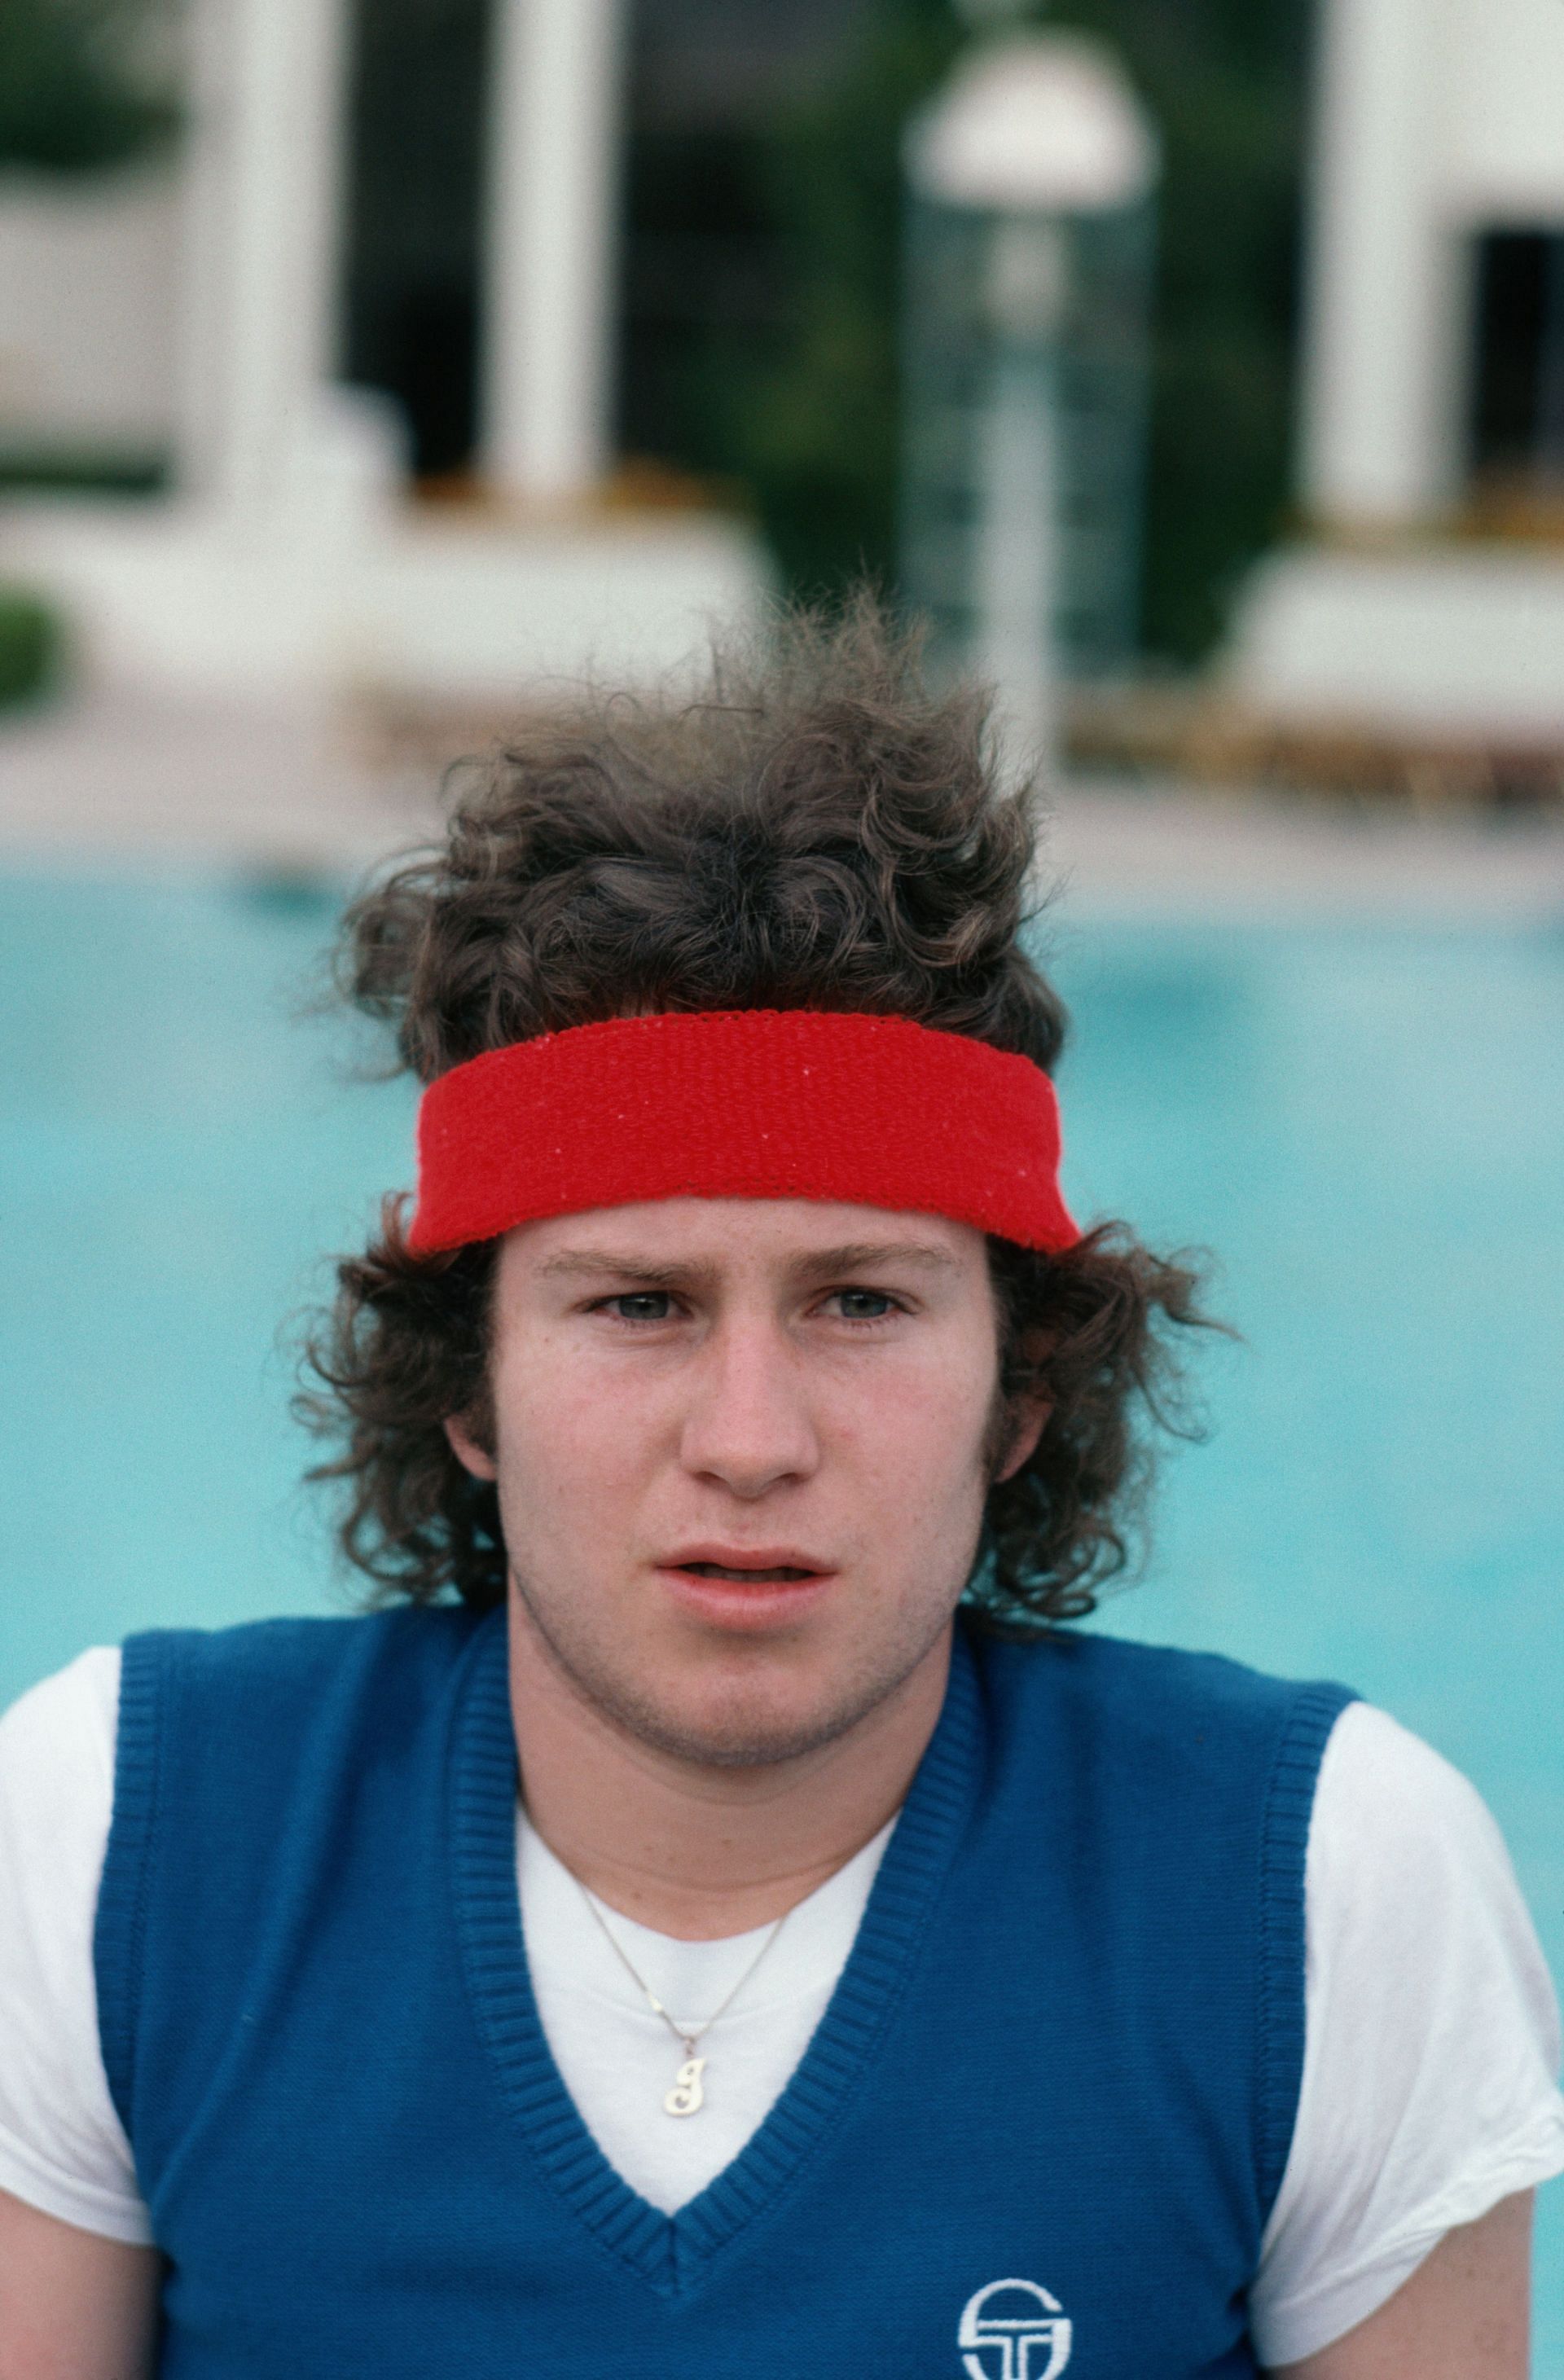 John McEnroe won the US Open in 1979.